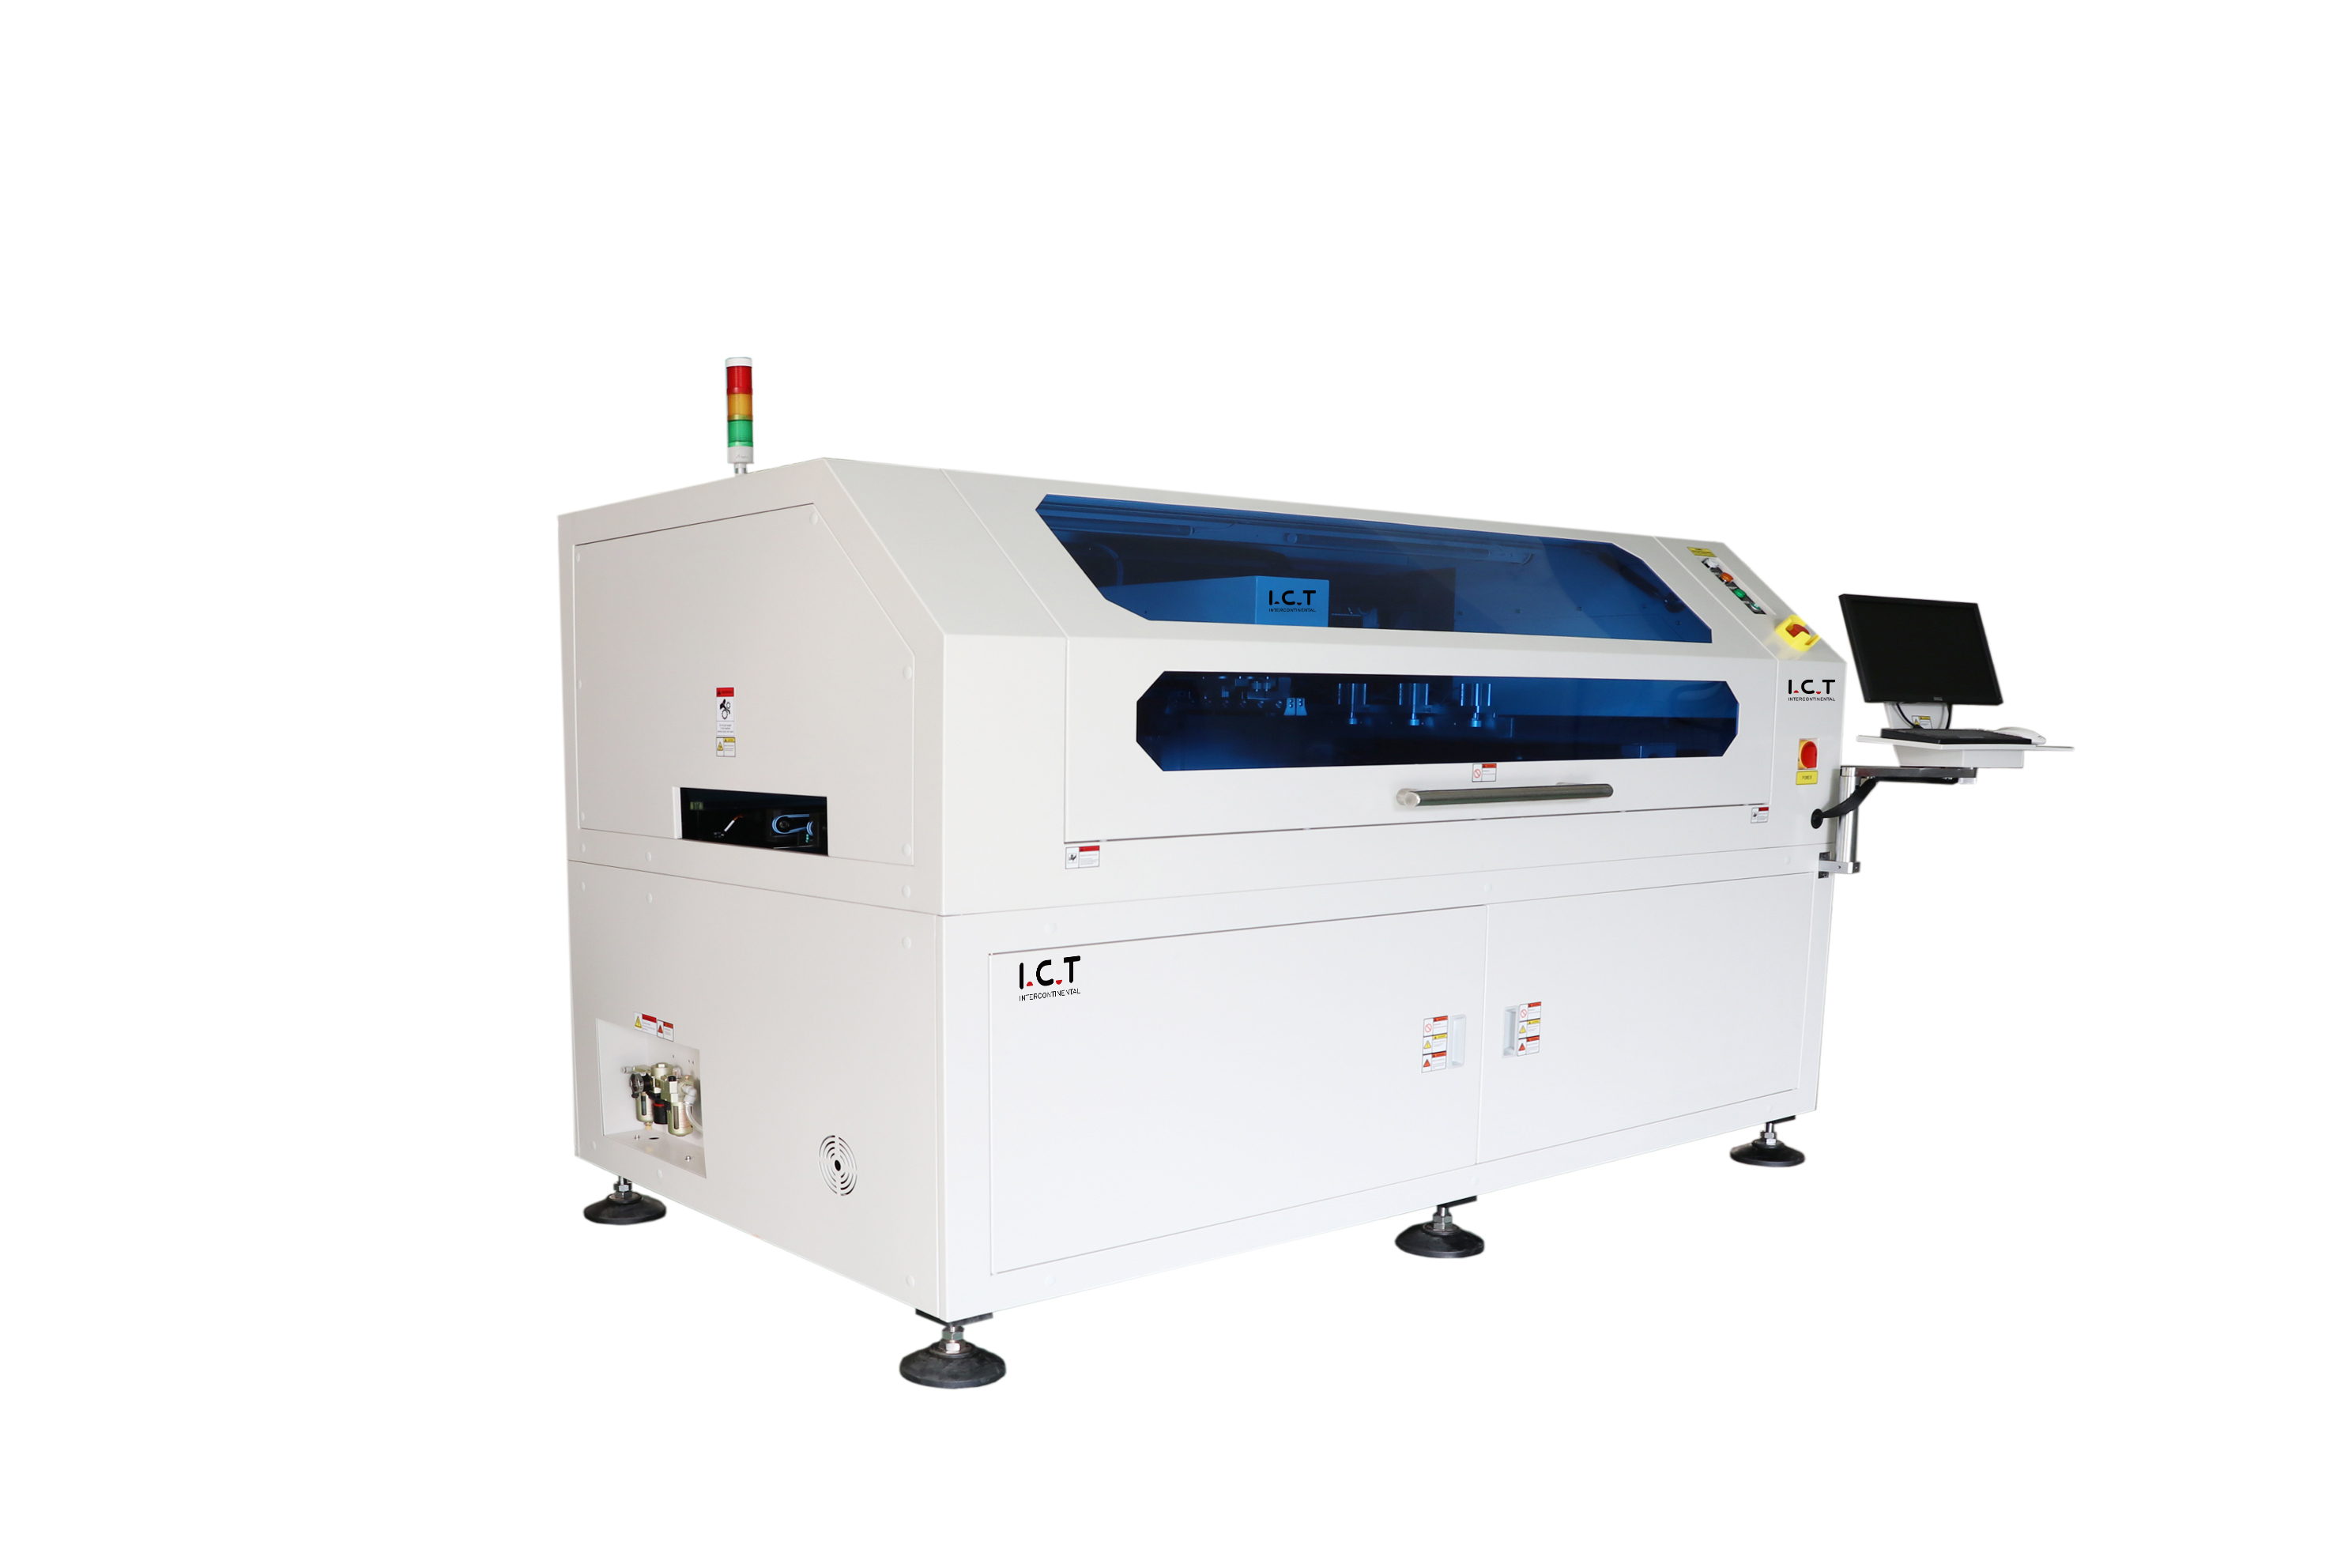  I.C.T-1500丨SMT Macchina da stampa automatica PCB stampino